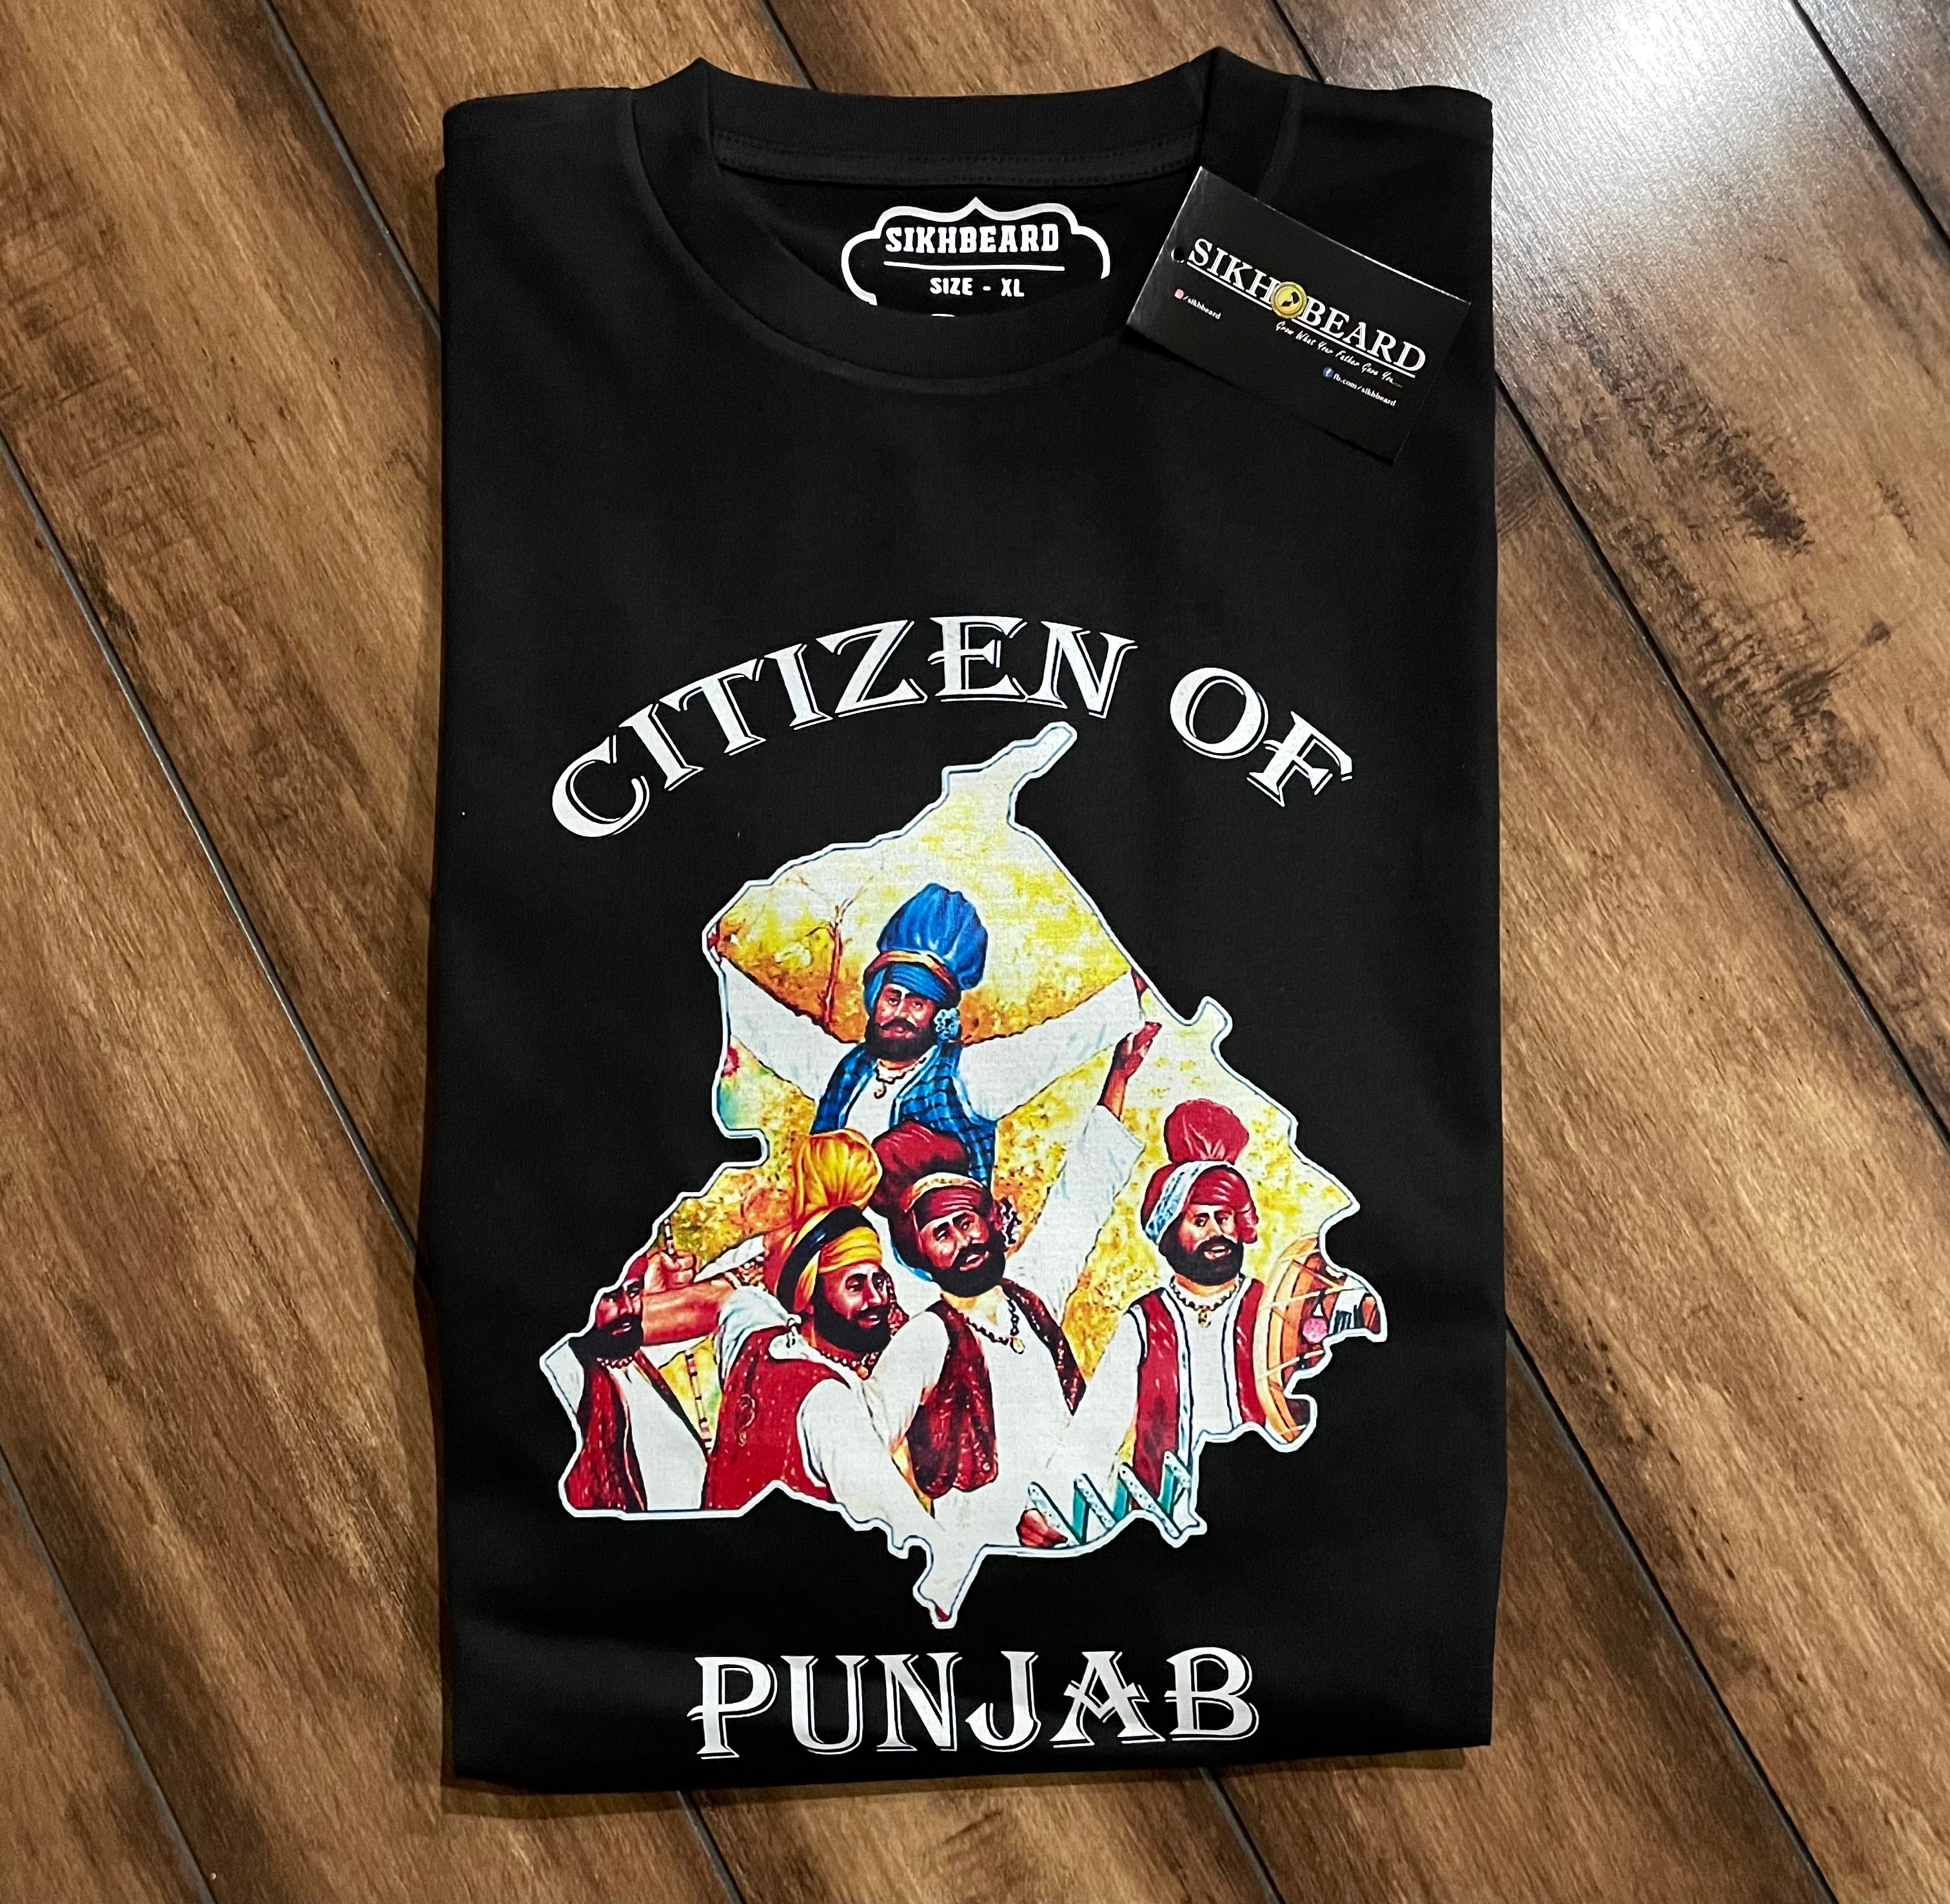 Citizen Of Punjab- Full Sleeve T-shirt